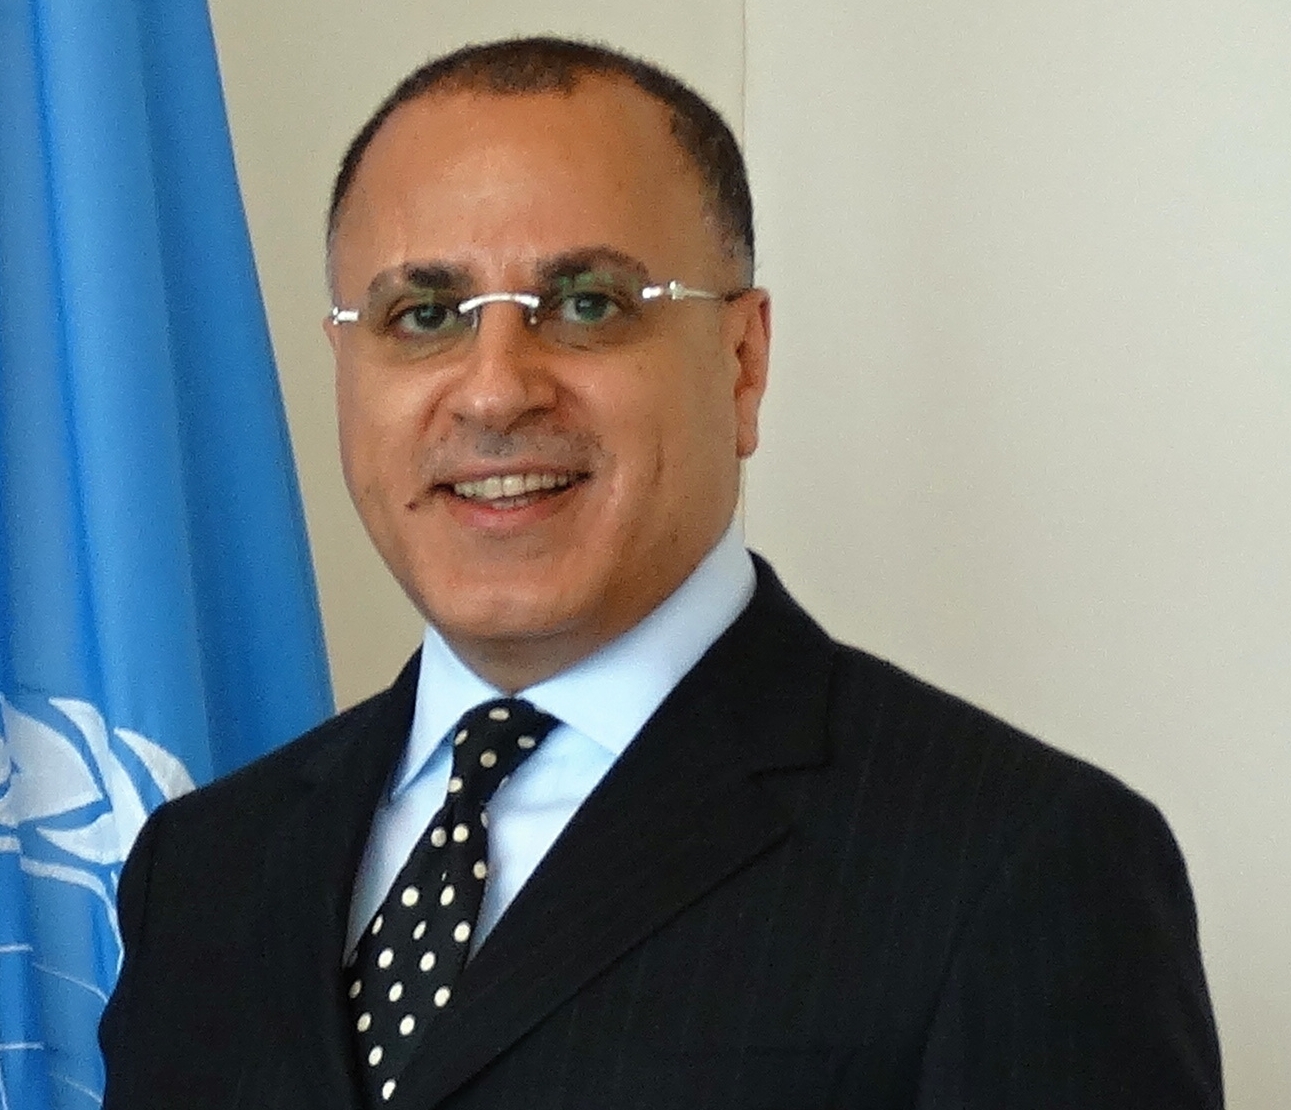 Kuwait's permanent representative to the United Nations and other international organizations in Geneva, Ambassador Jamal Al-Ghunaim